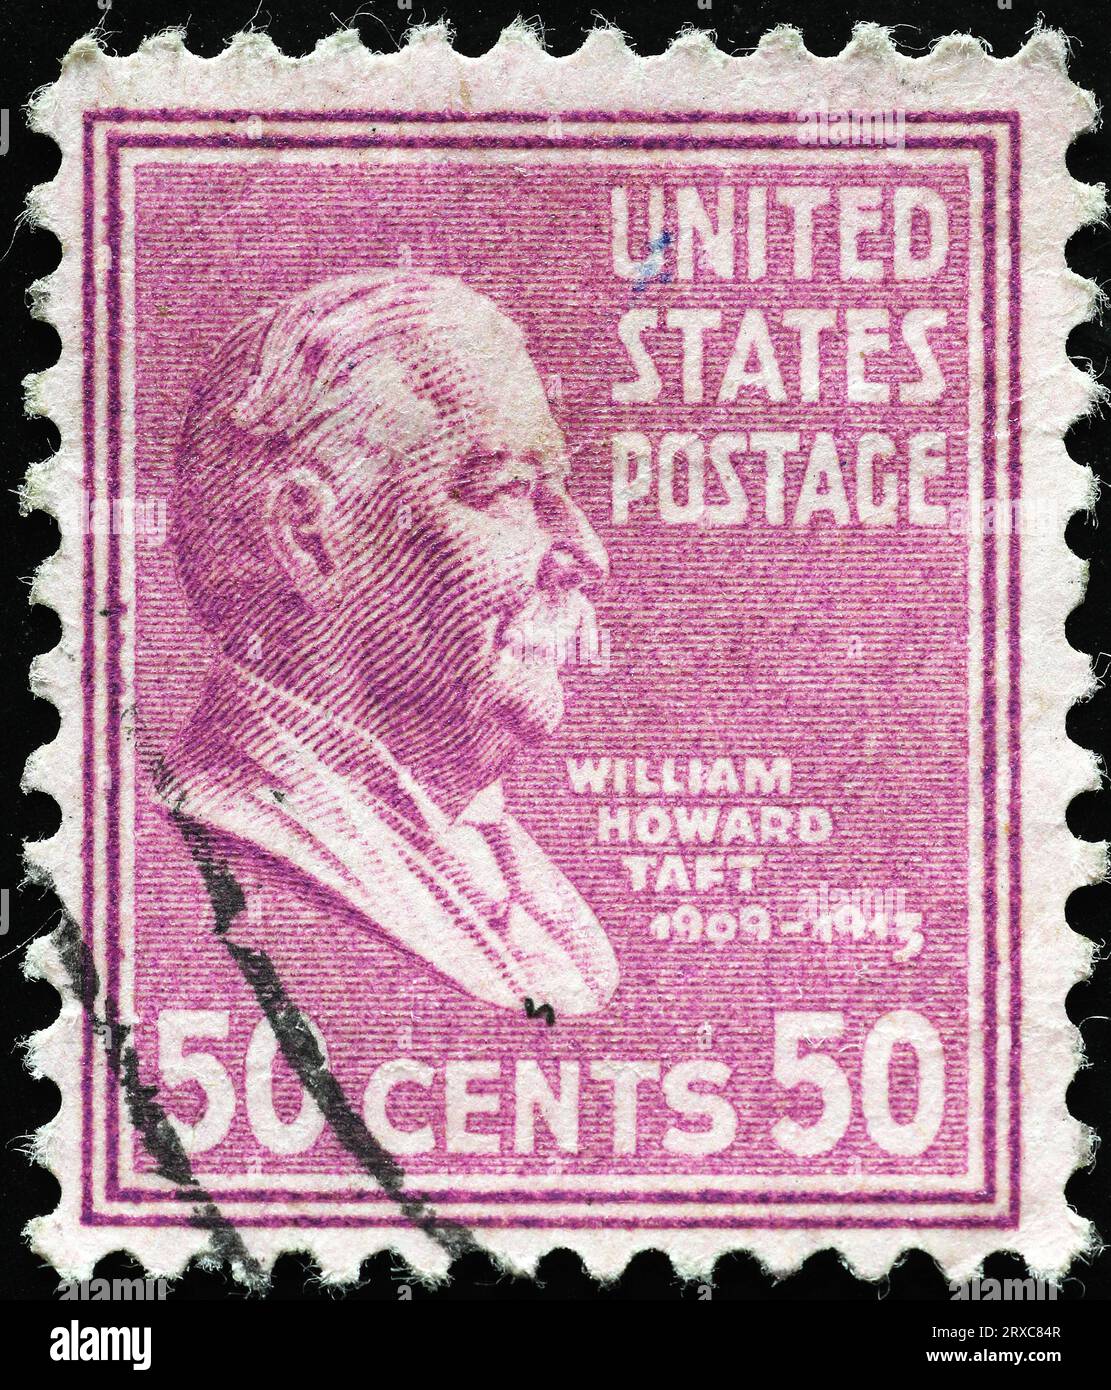 Il presidente DEGLI STATI UNITI William Howard Taft con francobollo vintage Foto Stock